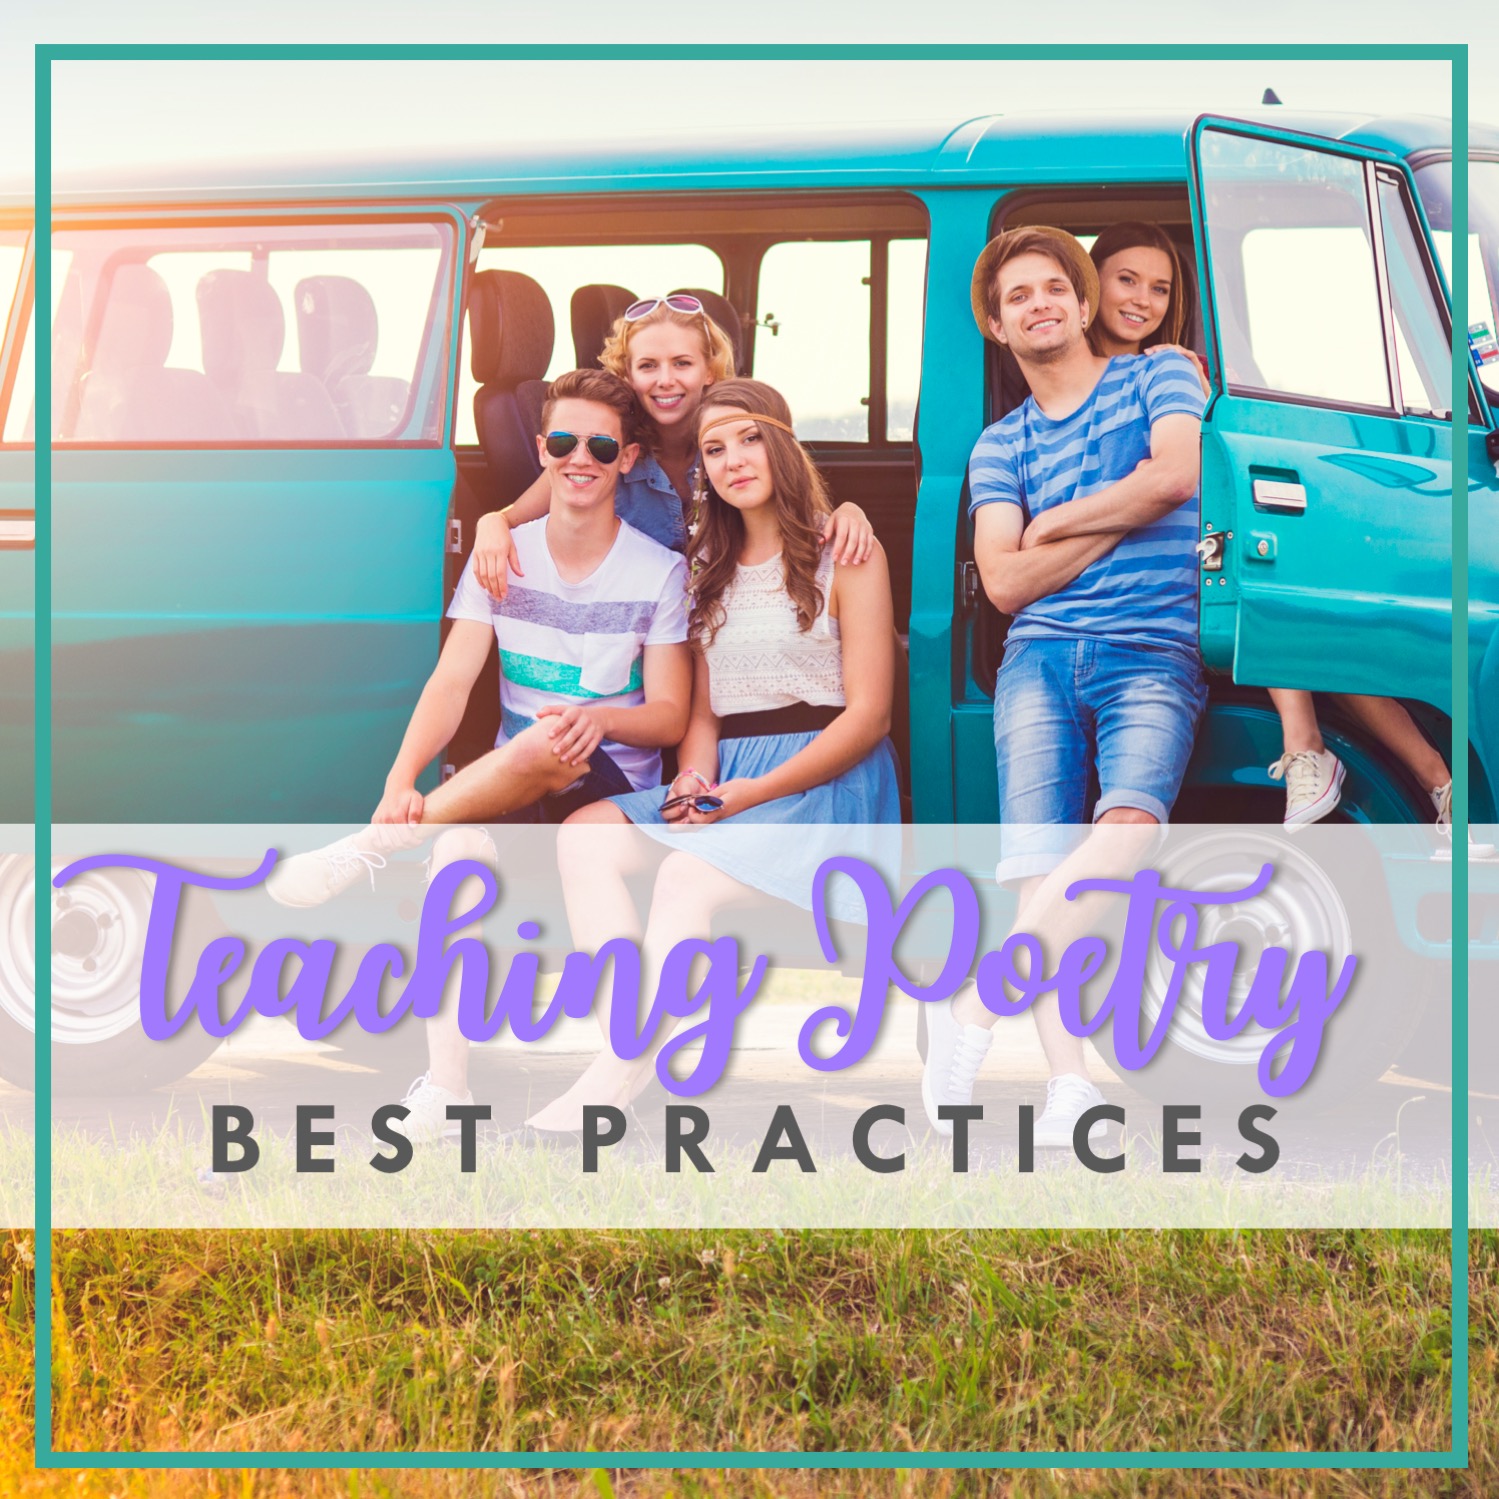 Teaching Poetry Best Practices (Copy)